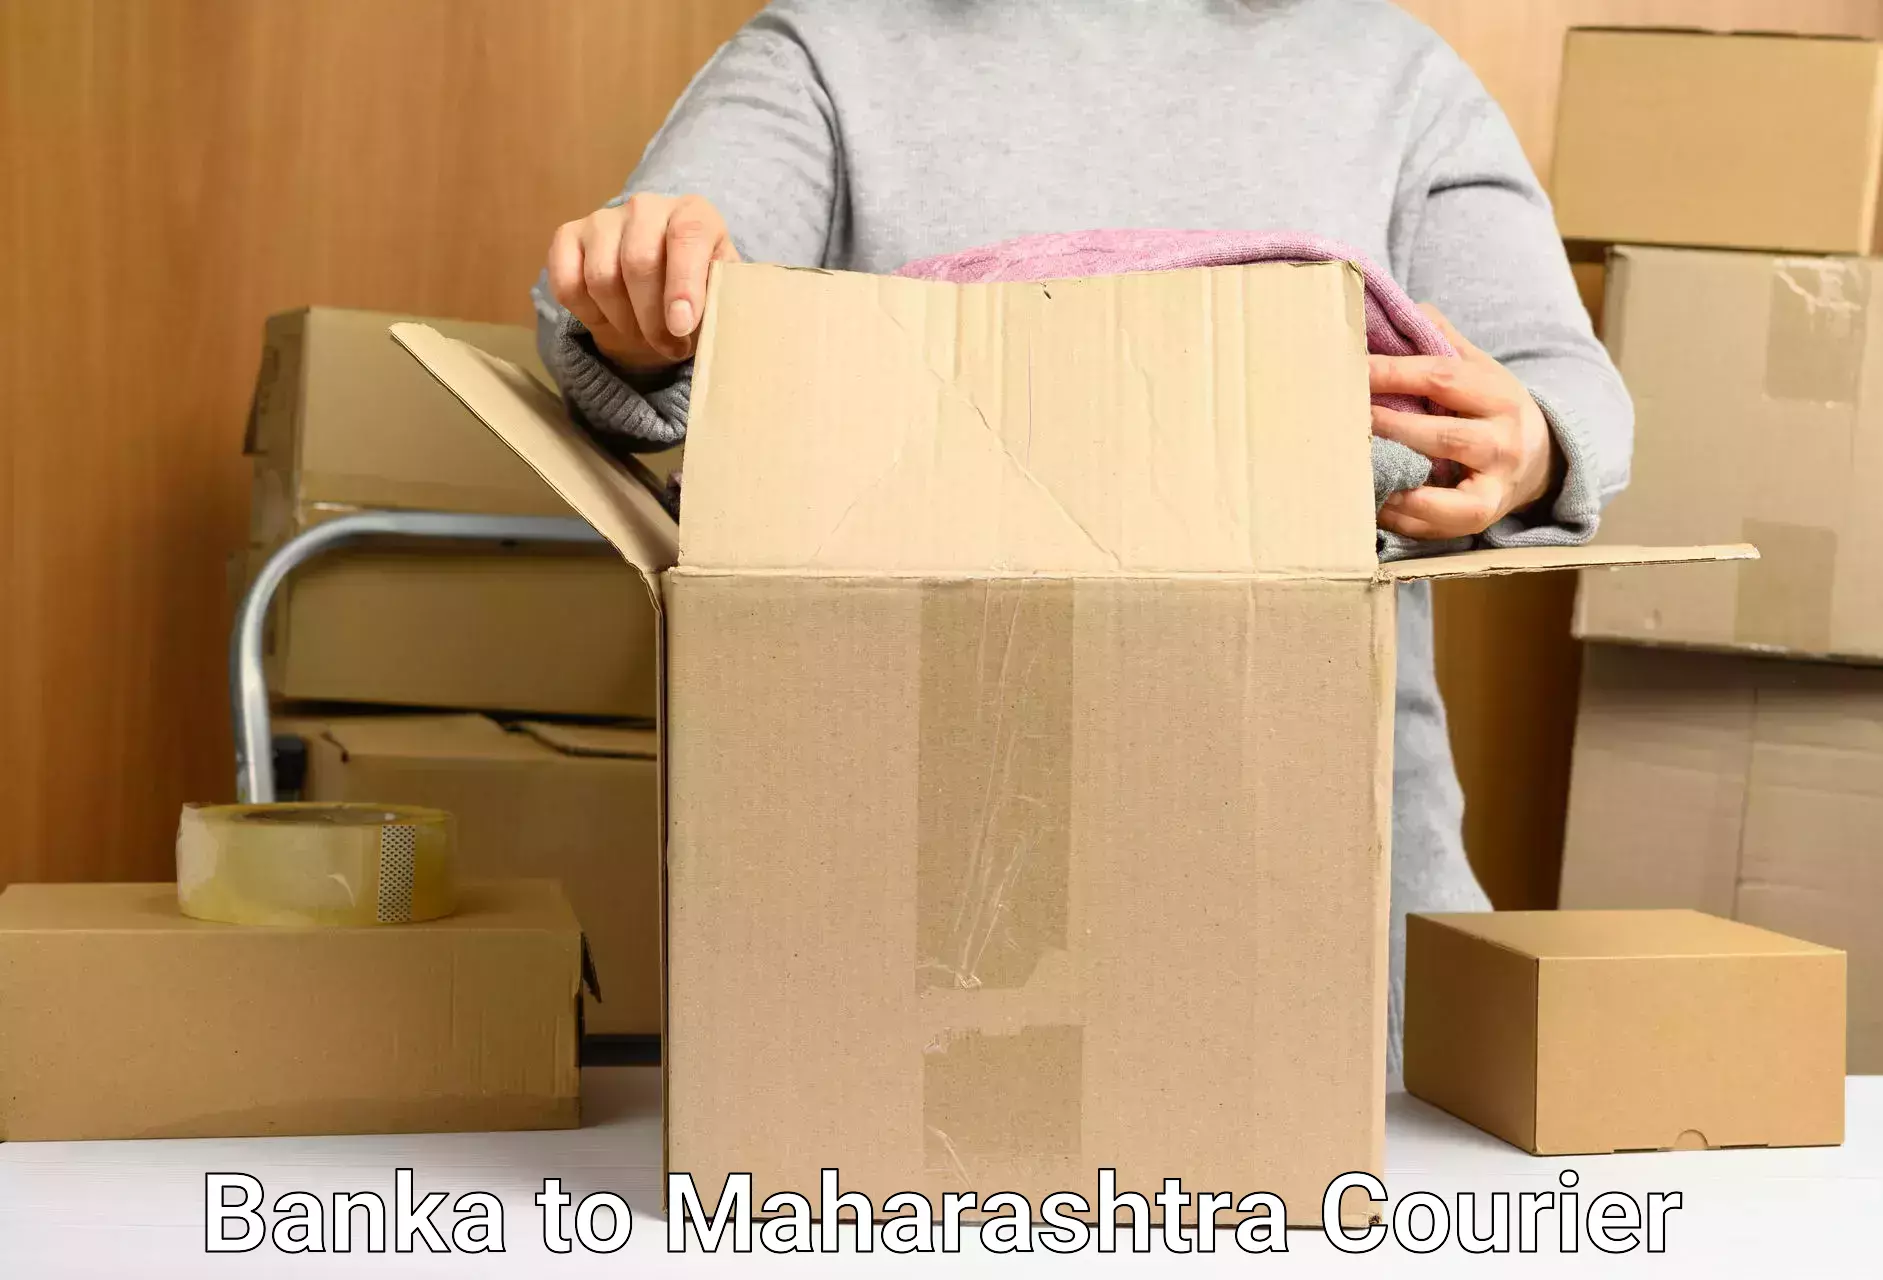 Parcel handling and care Banka to Maharashtra